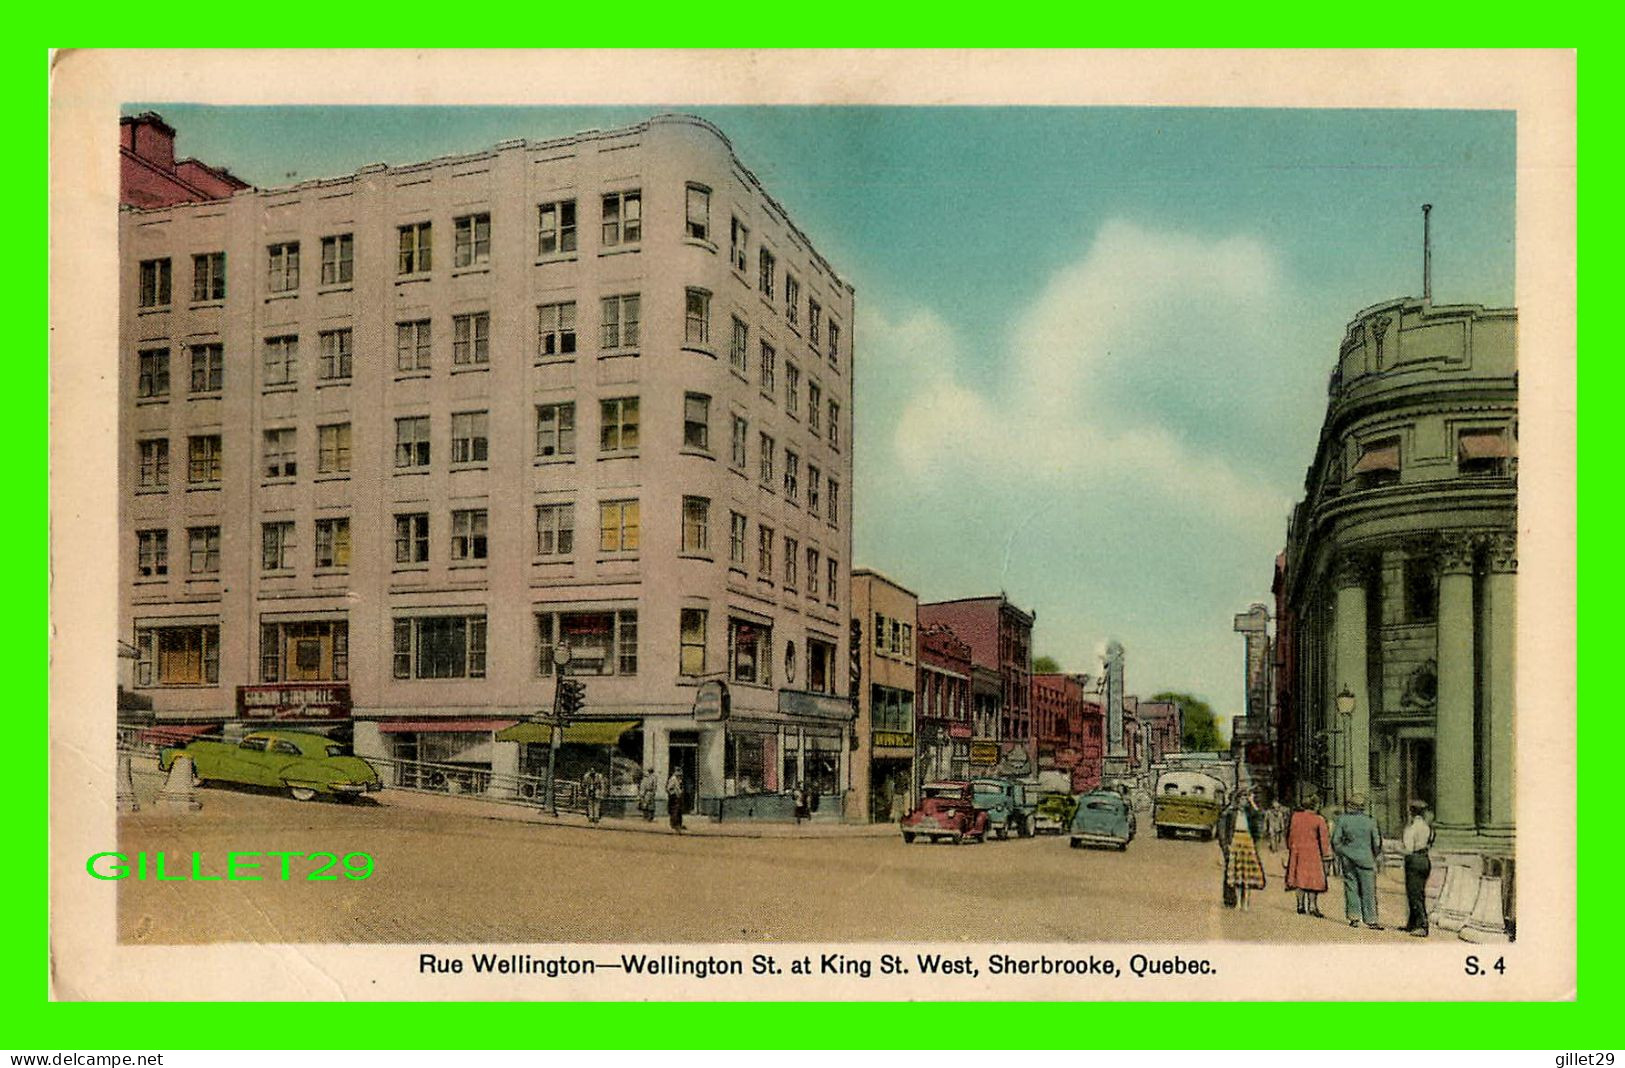 SHERBROOKE, QUÉBEC - RUE WELLINGTON & KING ST. WEST - VOITURE VERTE - CIRCULÉE EN 1952 - PUB. BY VALENTINE-BLACK CO LTD - Sherbrooke